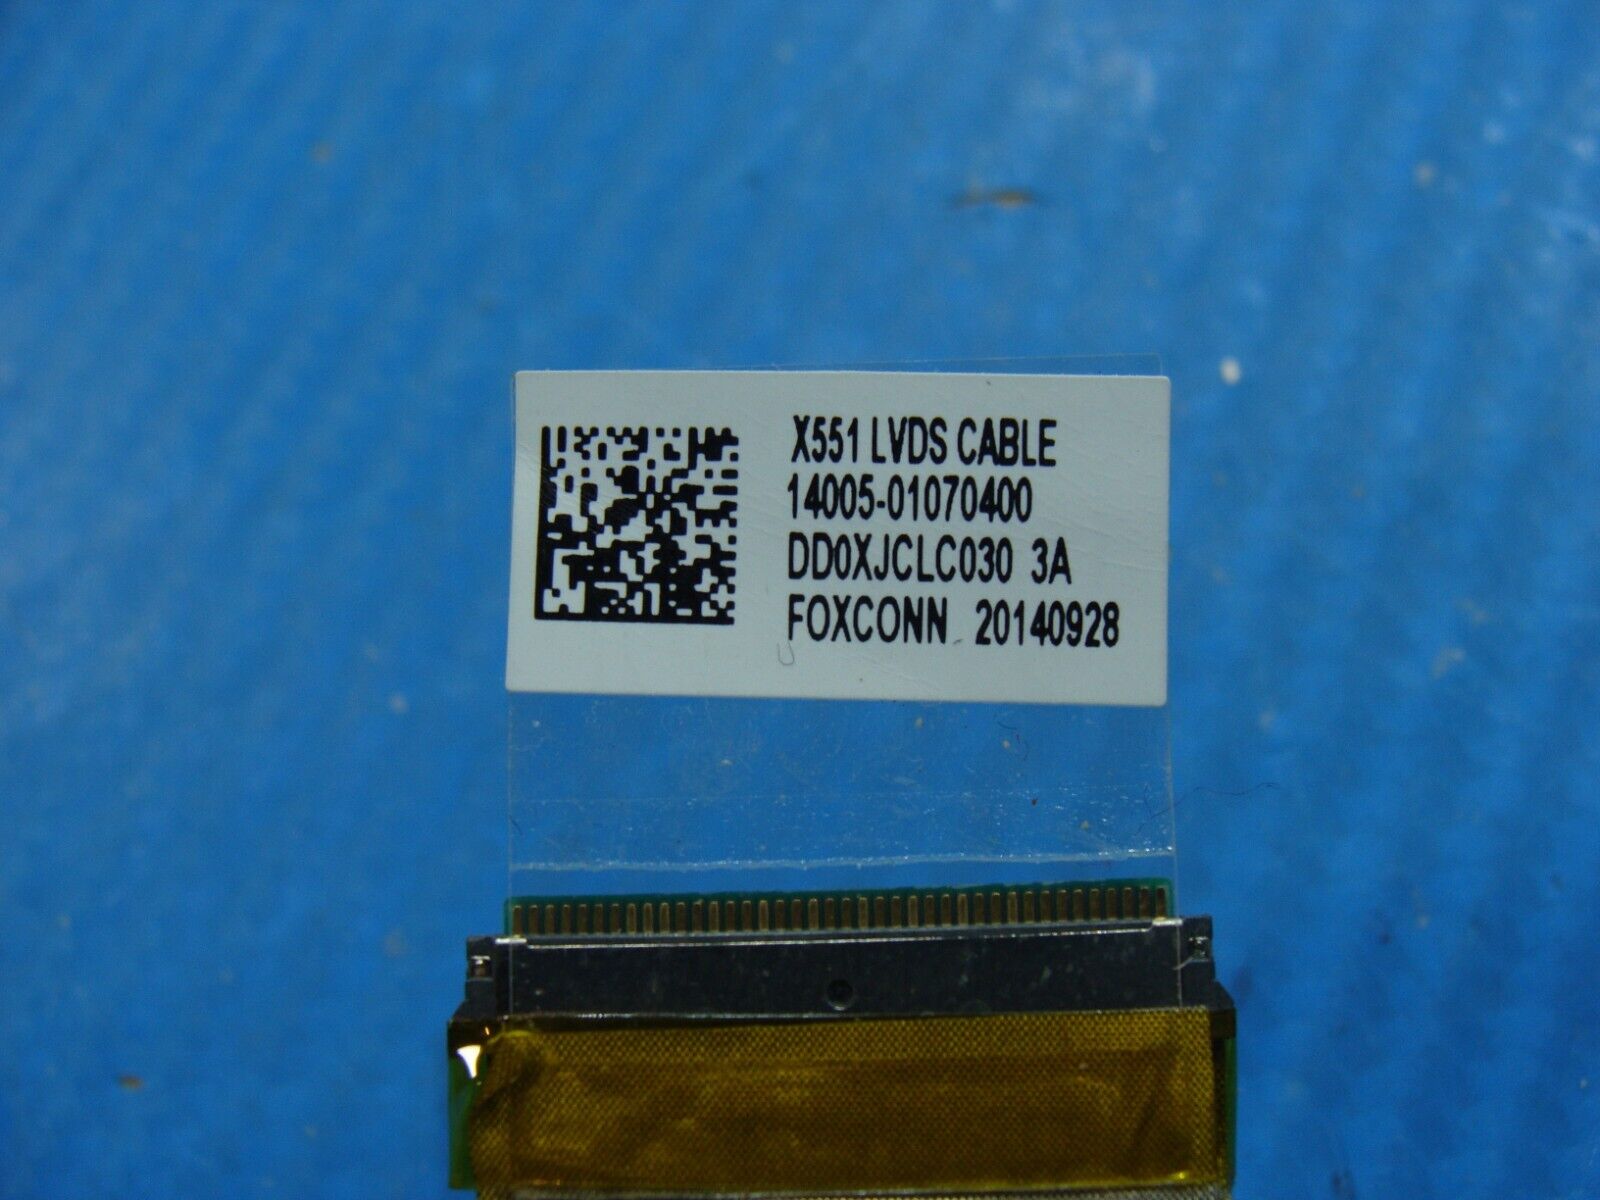 Asus 15.6” X551MAV-DB01 OEM Laptop LCD Video Cable DD0XJCLC030 14005-01070400